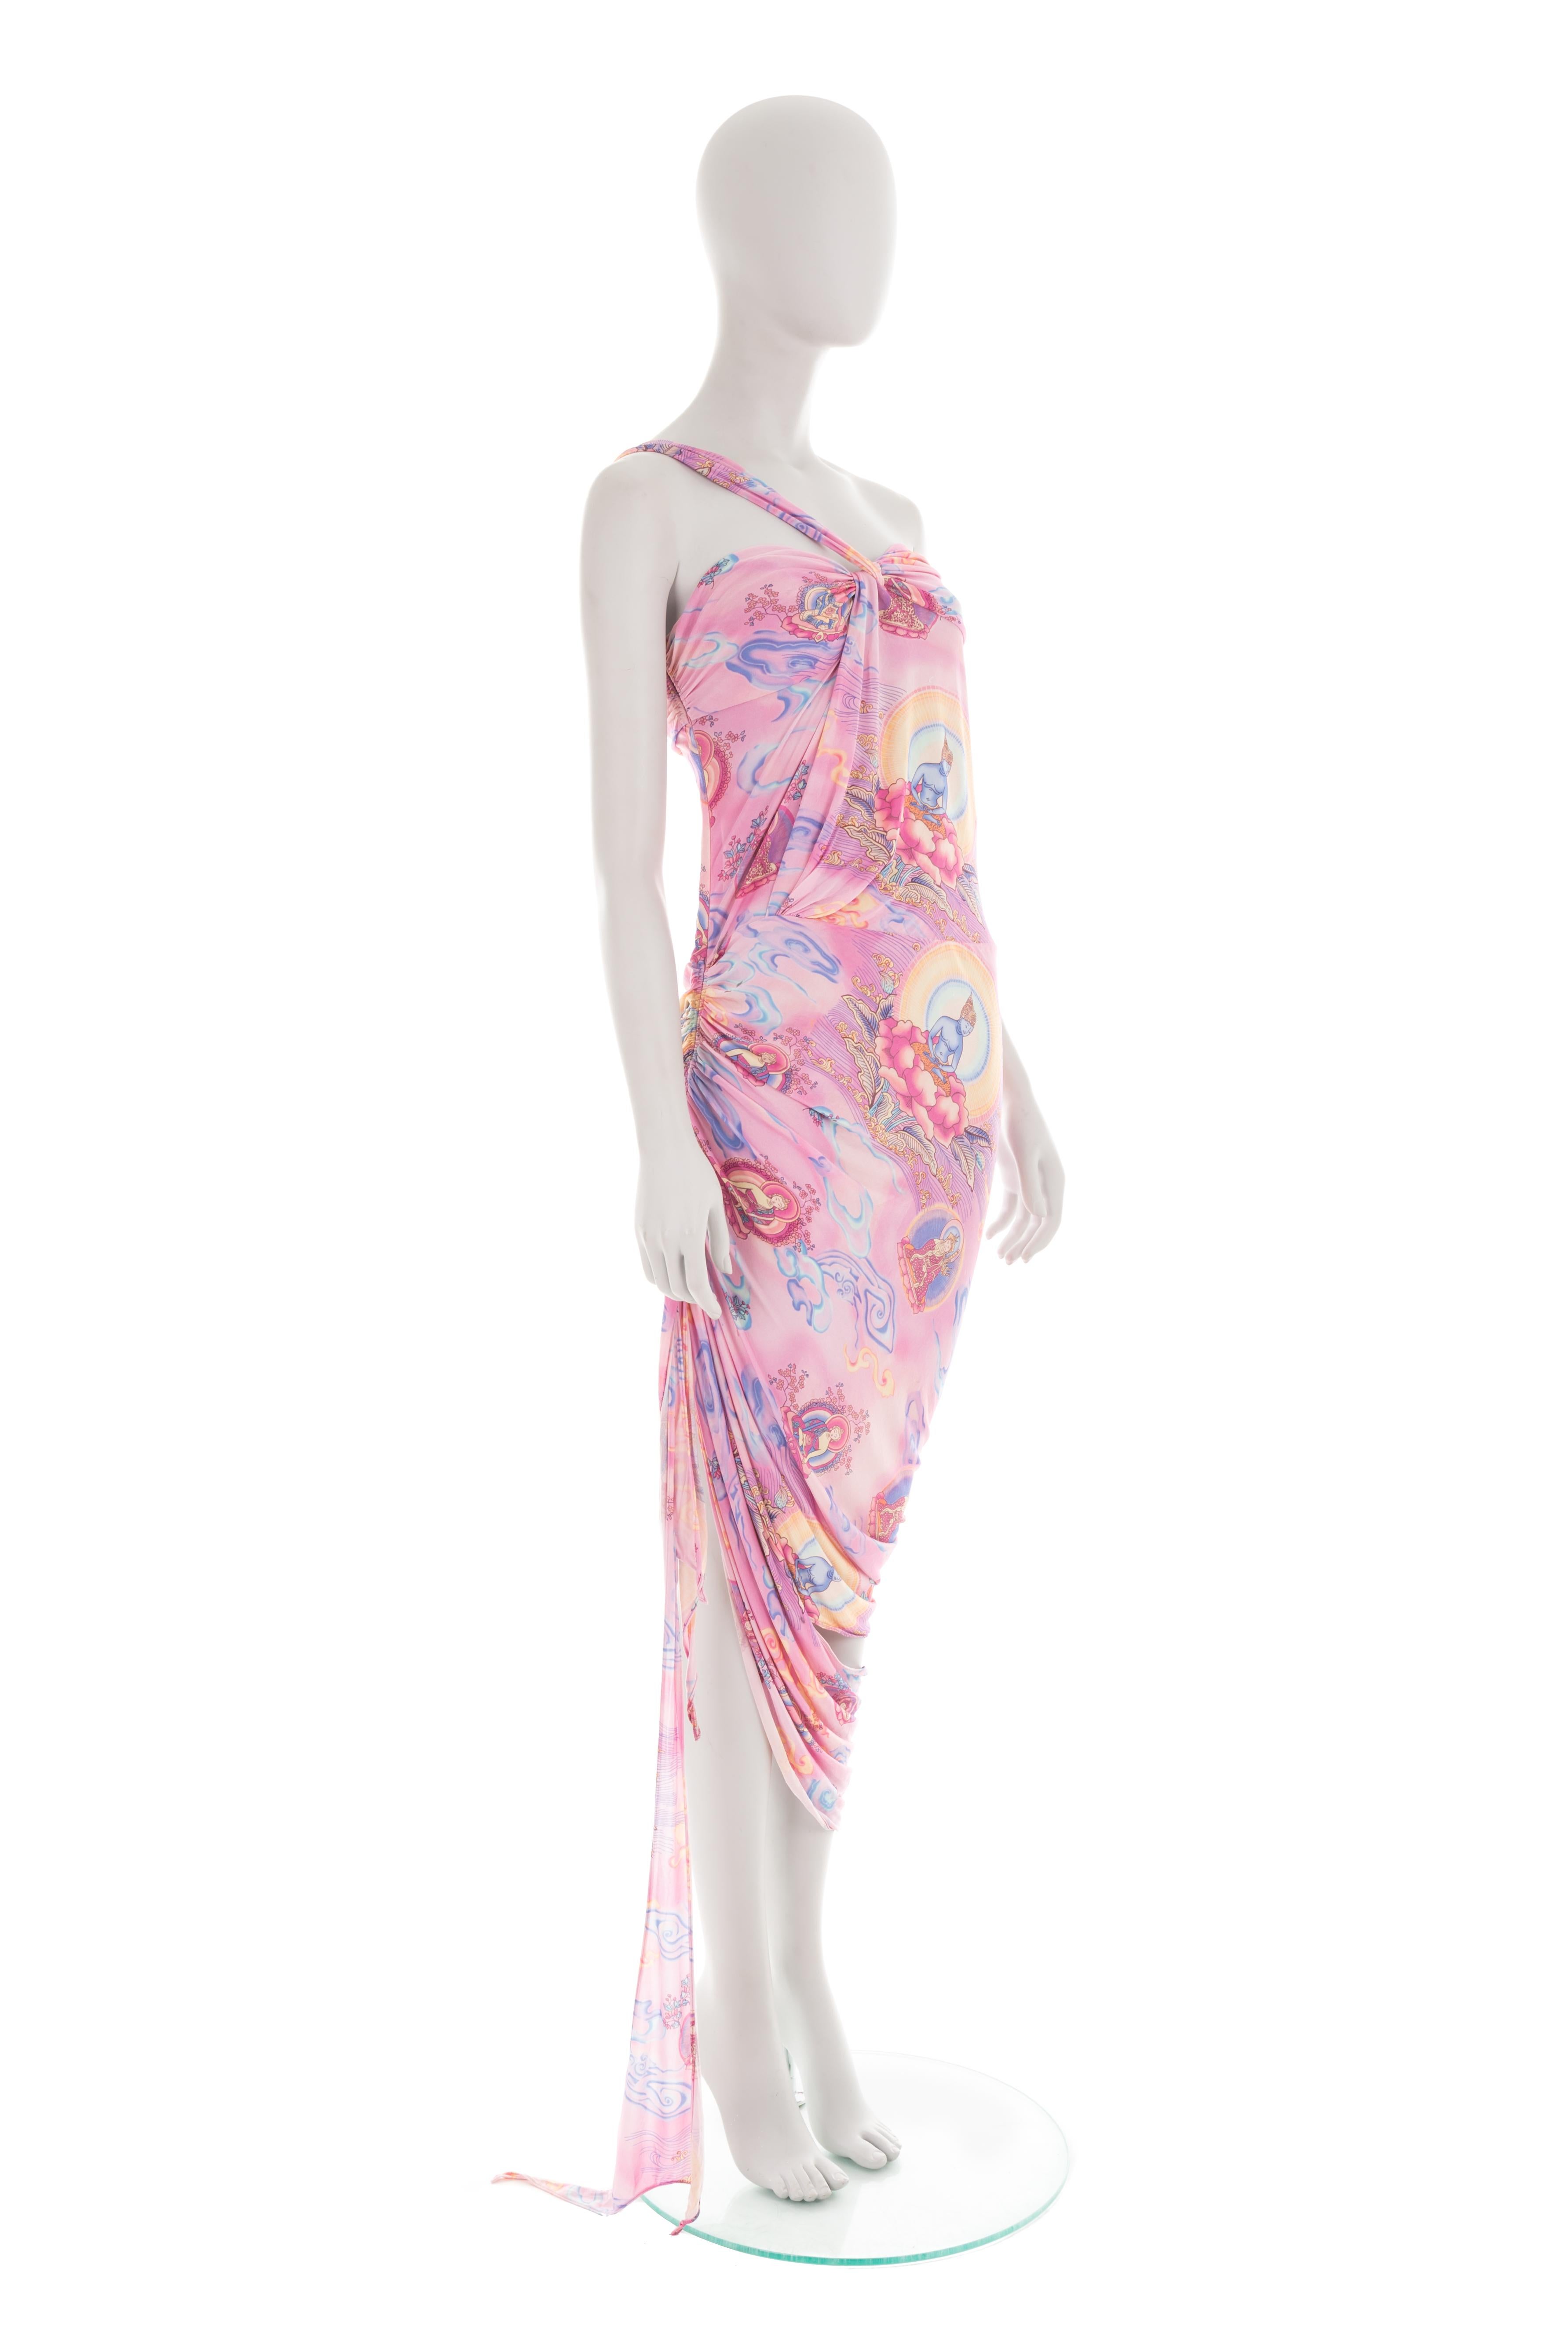 Women's Emanuel Ungaro S/S 2004 pink “Shiva” print draped cut-out dress For Sale